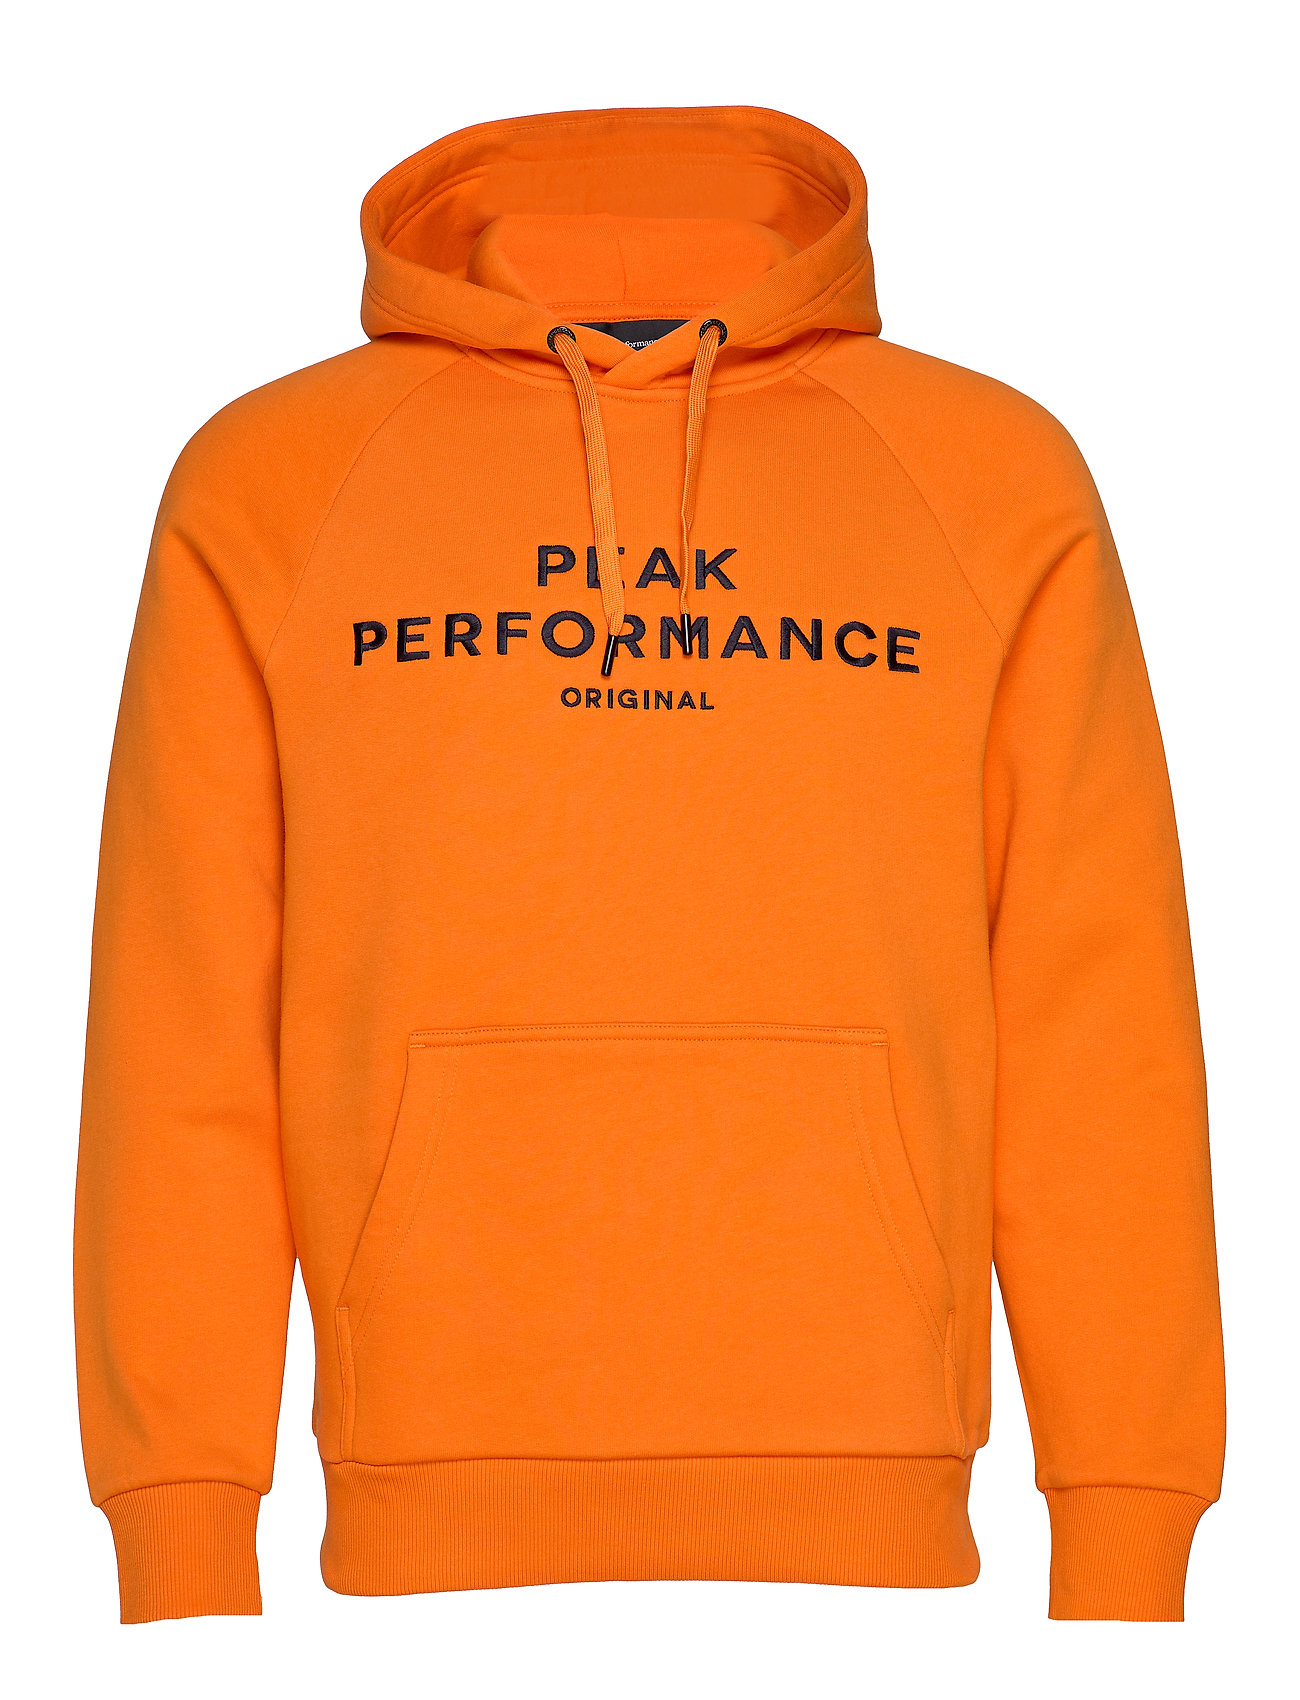 peak performance hoodie orange